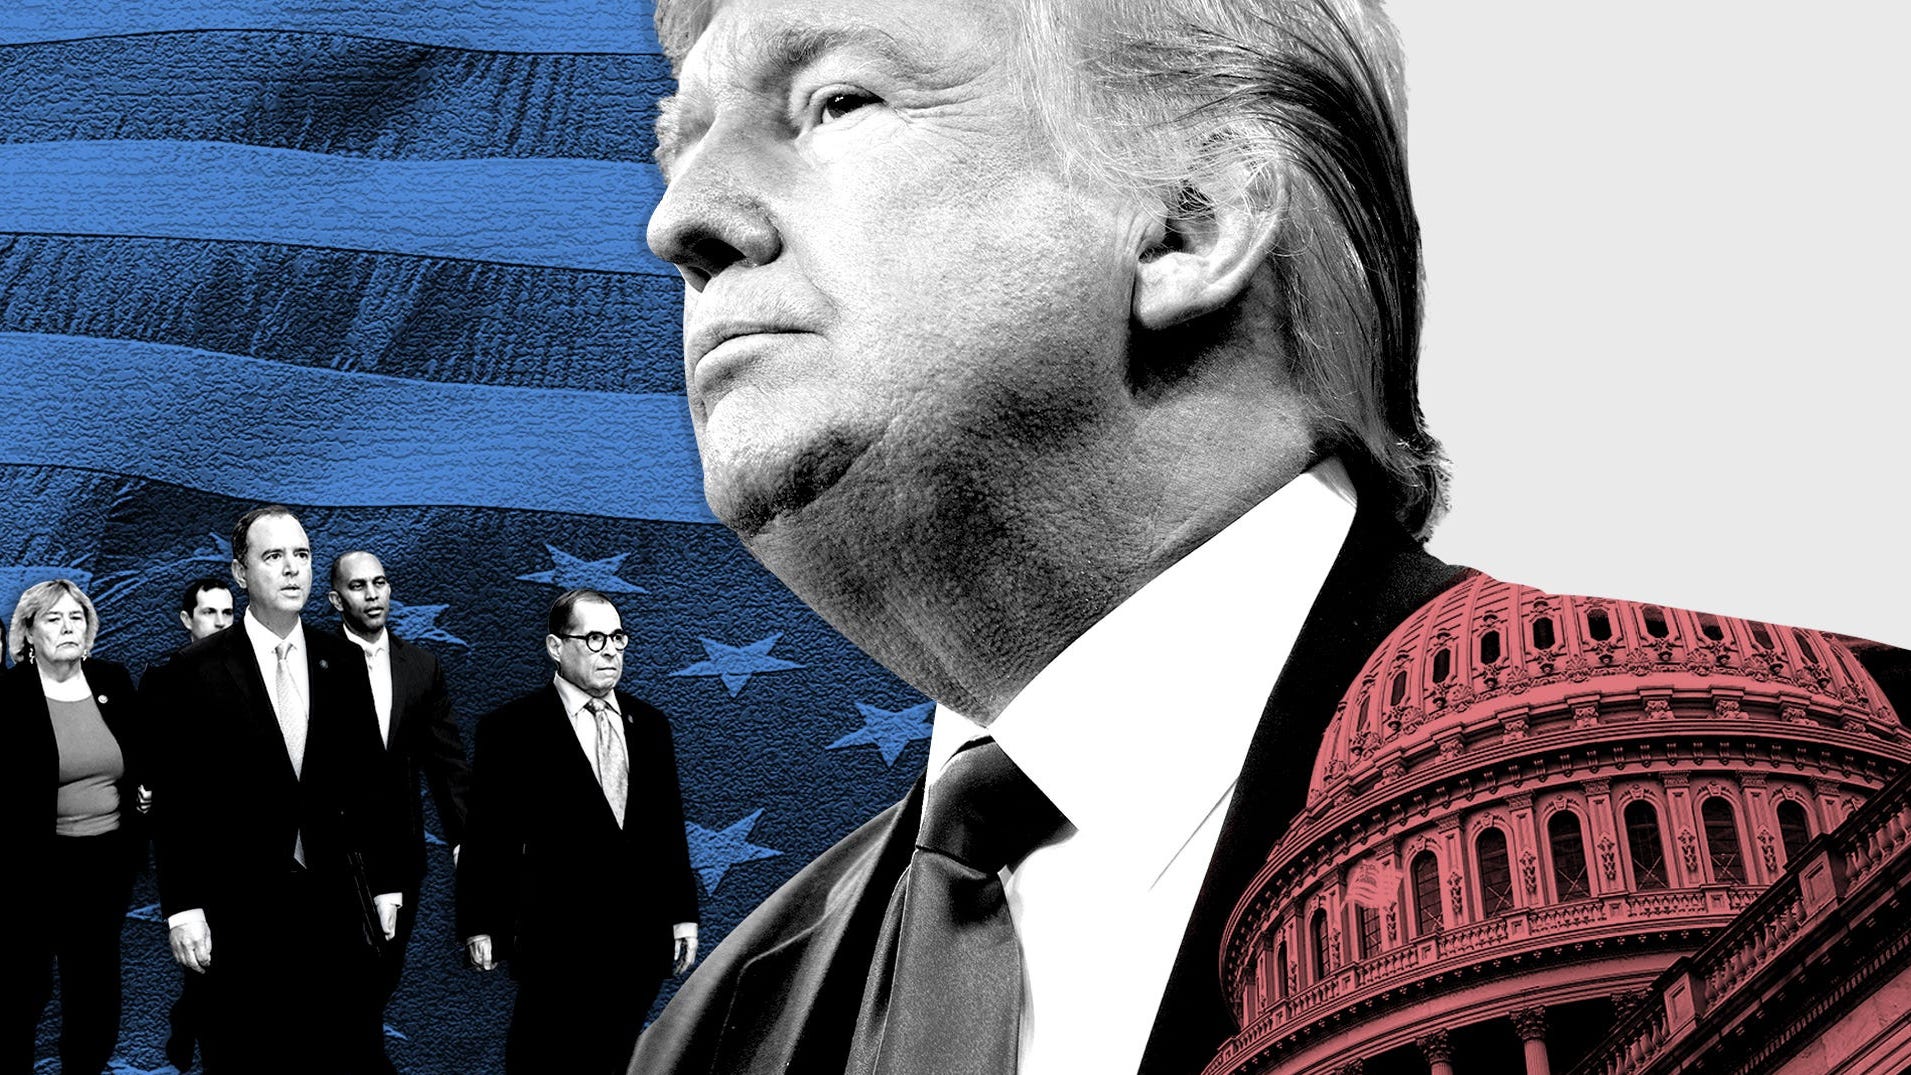 Impeachment Trump trial could render verdict on Senate, key players